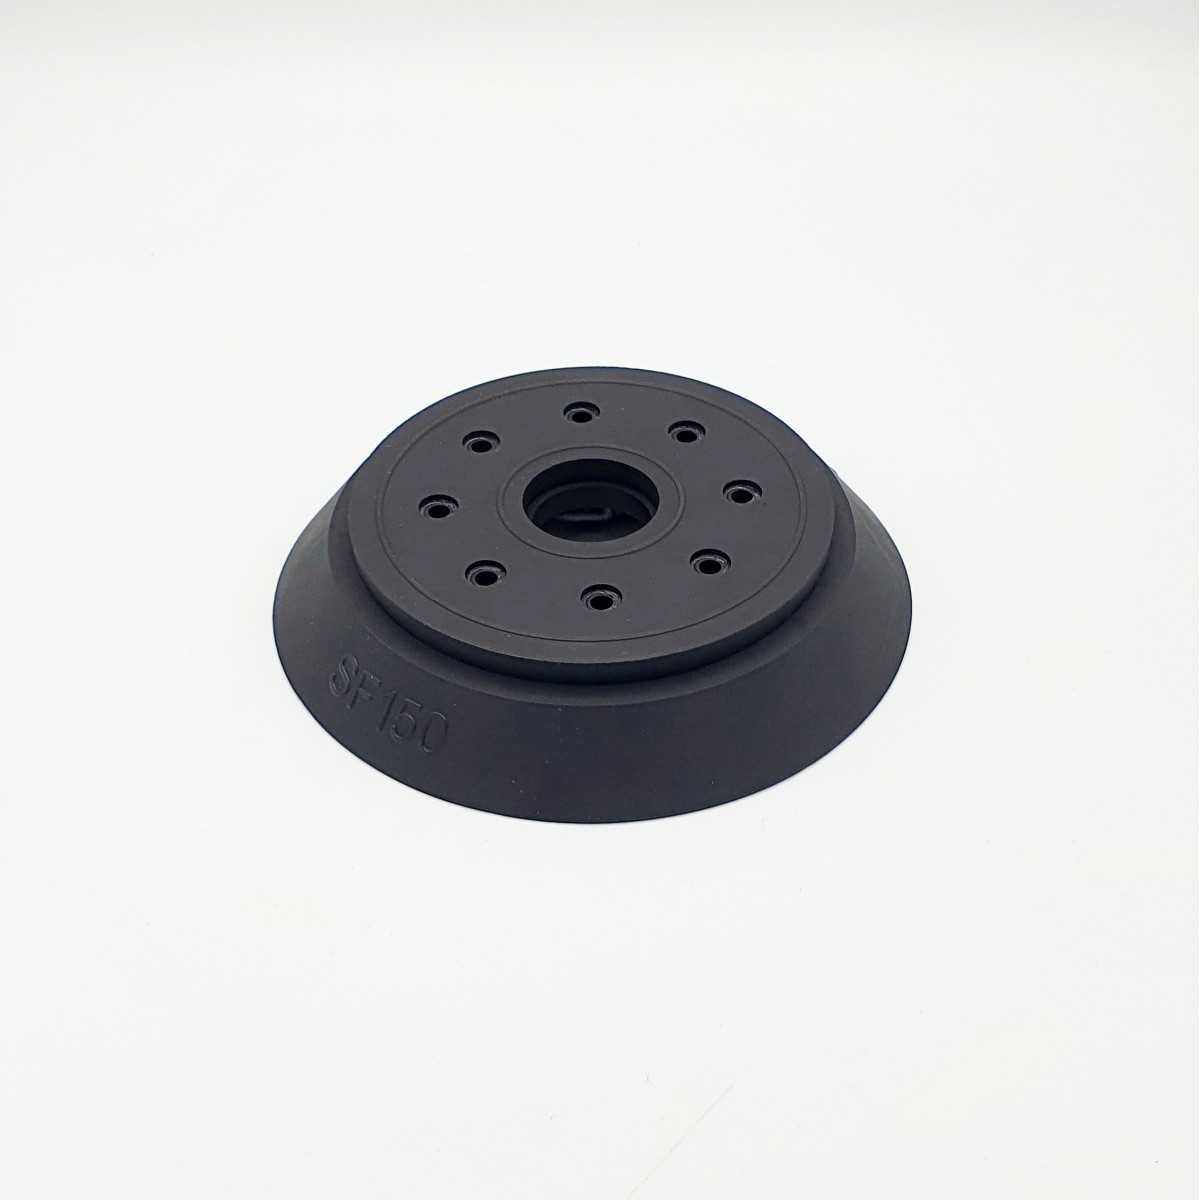 Flat suction cup D150 / NBR / m.S. / o.A. | Beta Online Shop